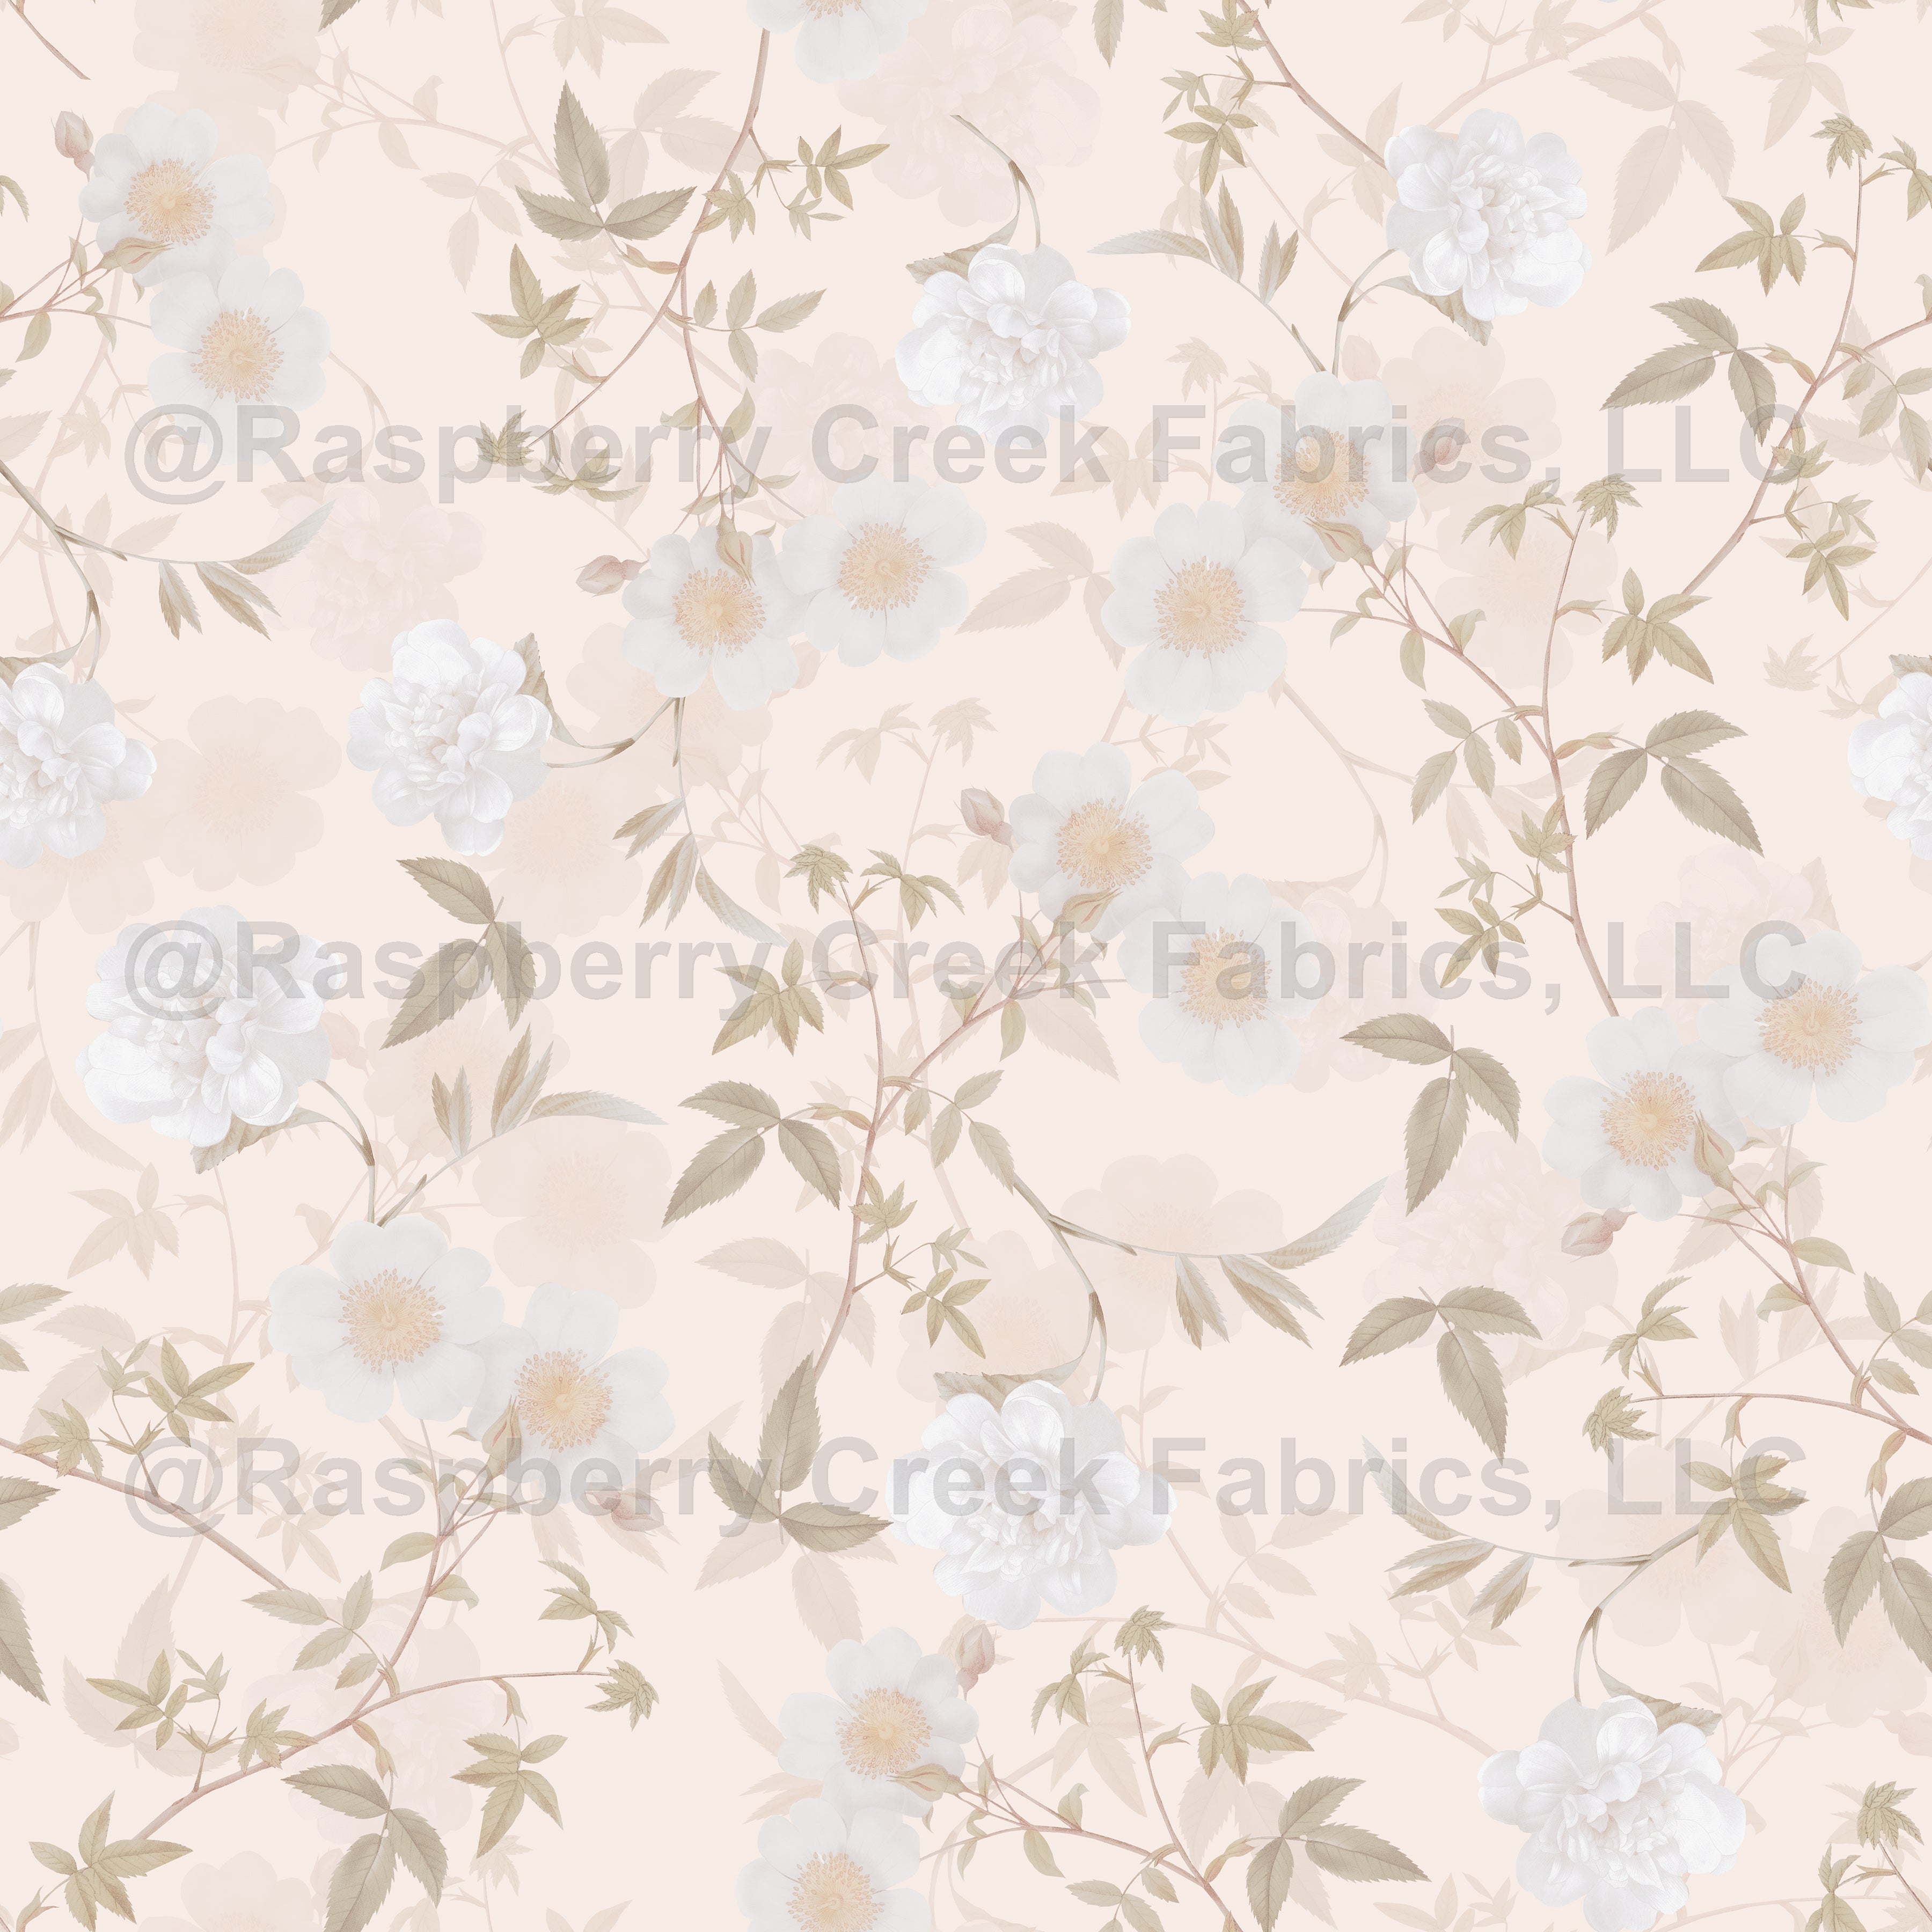 Vintage  Redouté  Roses Blush Wallpaper, Raspberry Creek Fabrics, watermarked